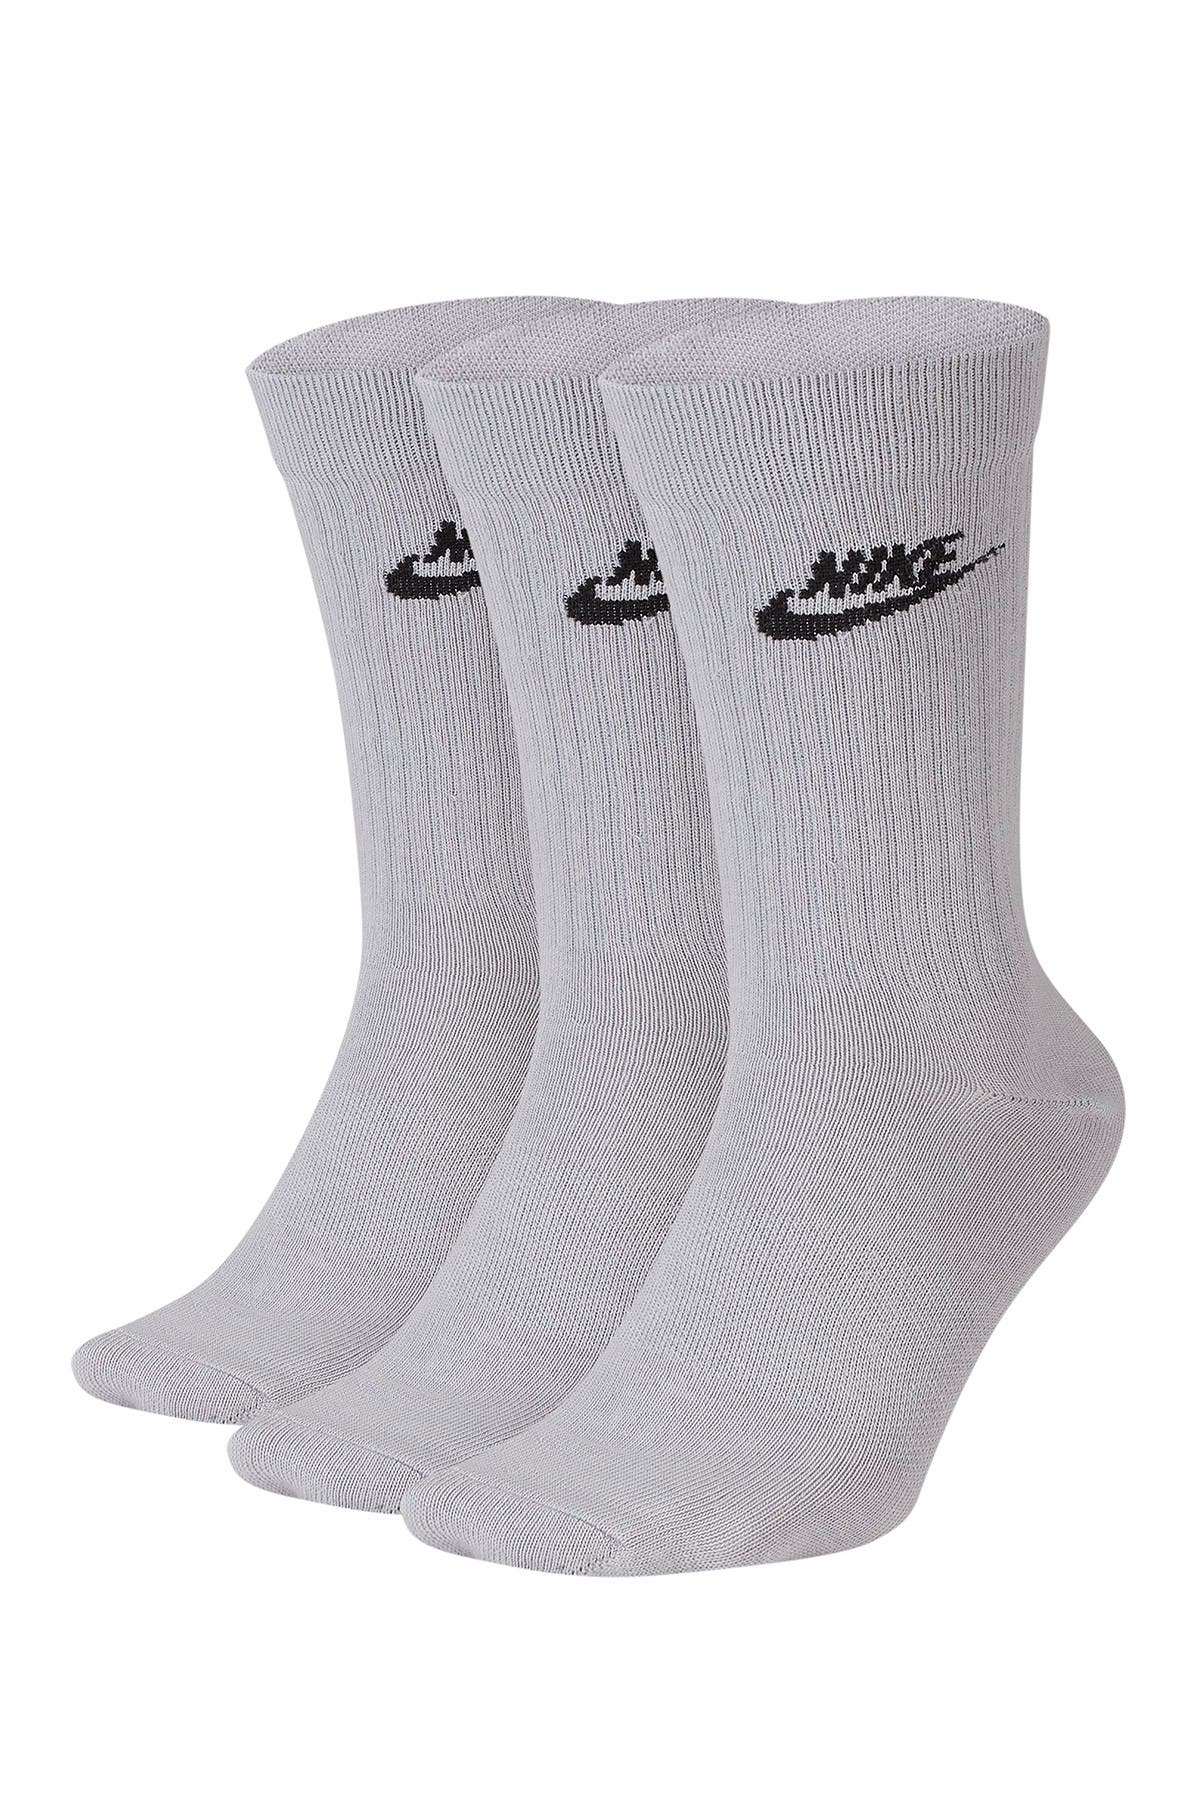 nike essential socks